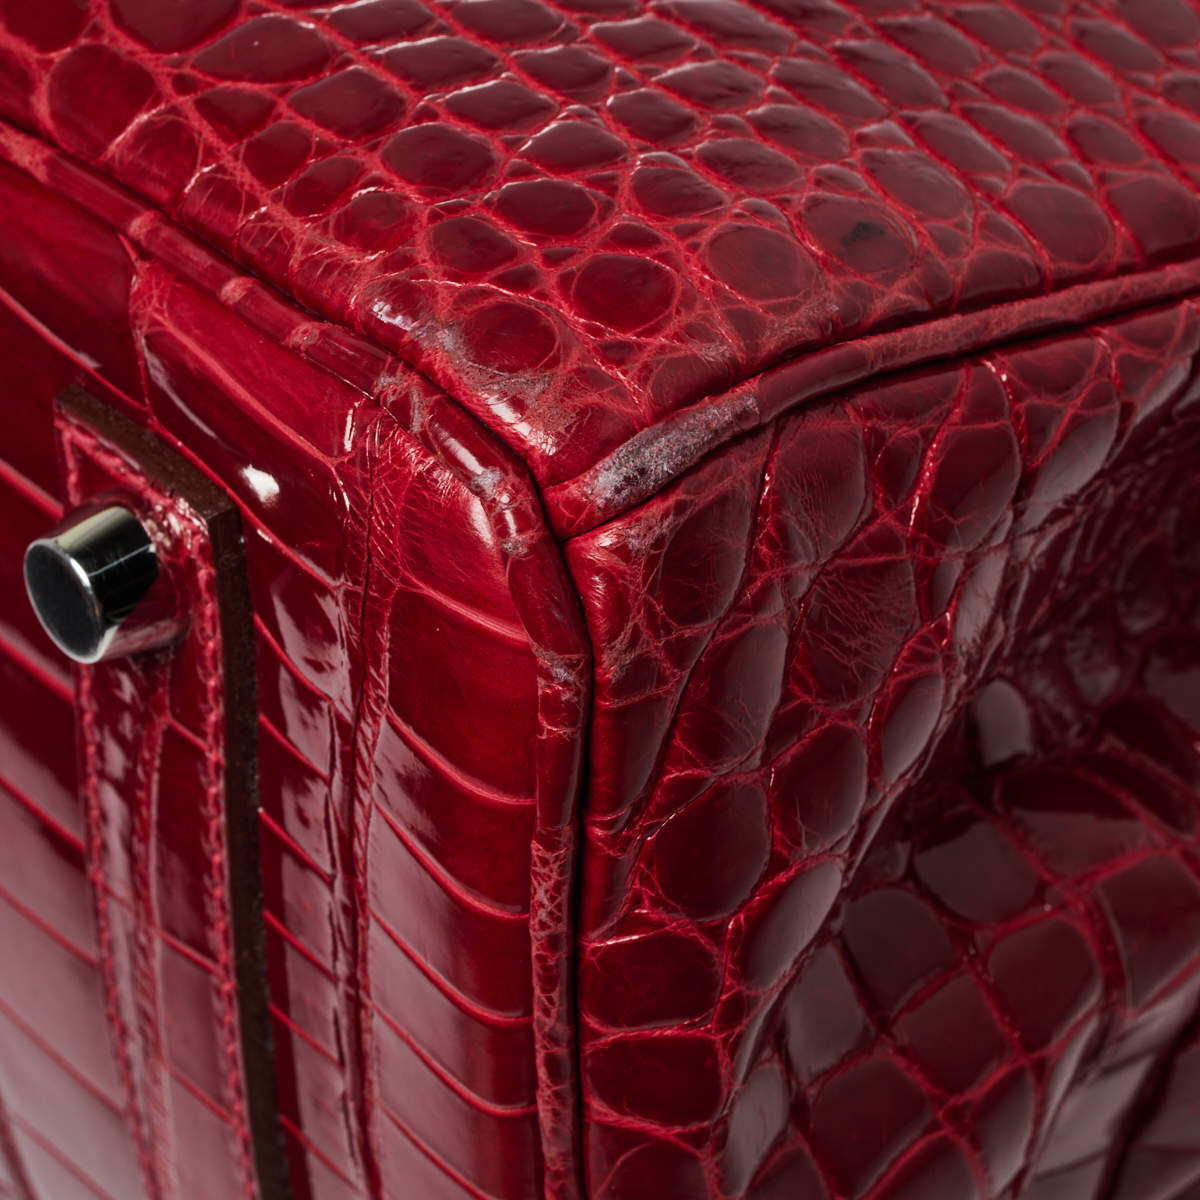 Hermès 25 cm Lipstick Red Porosus Crocodile Diamond Encrusted